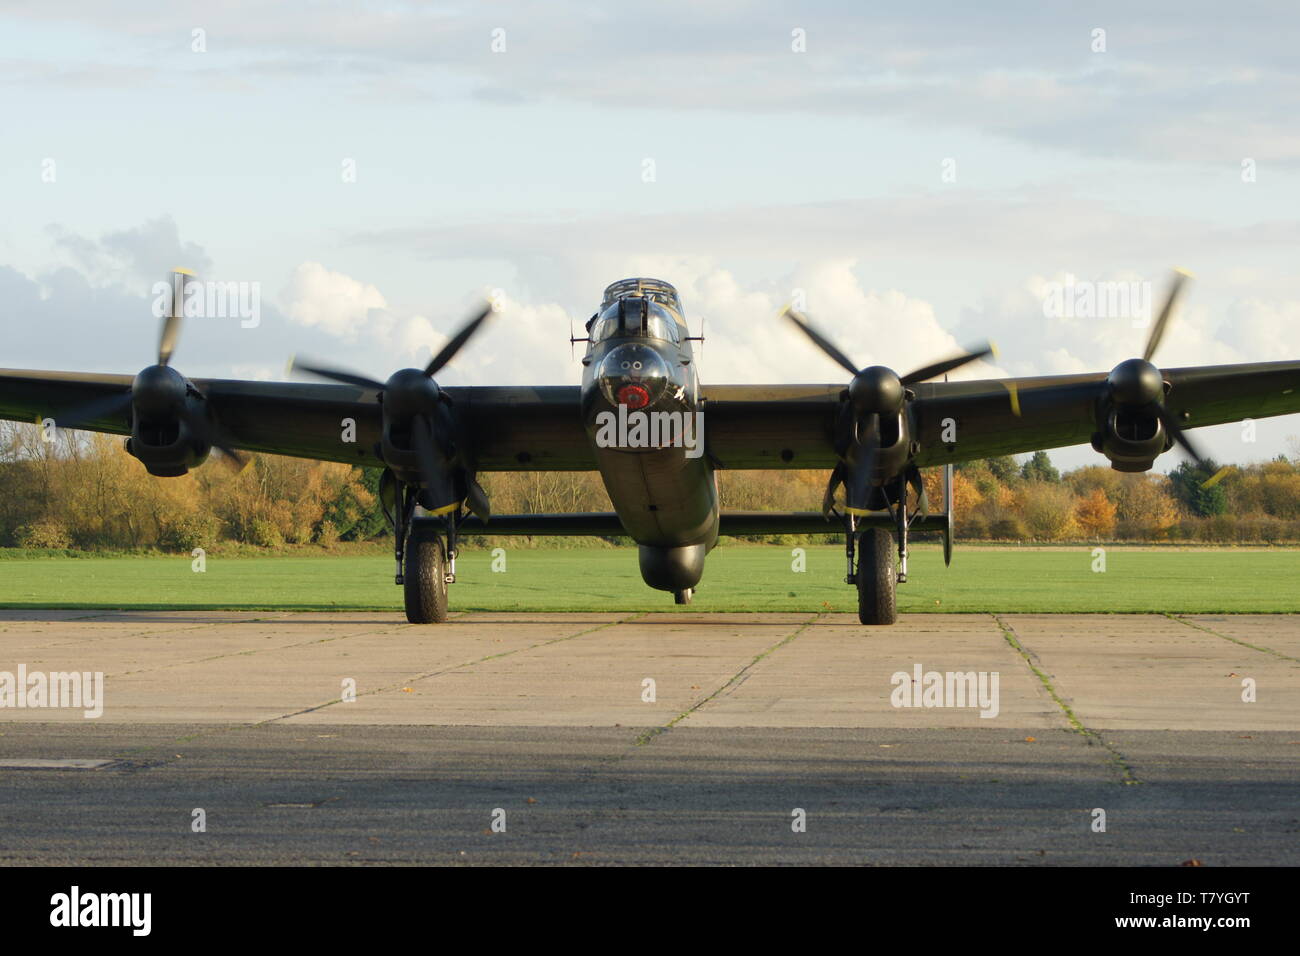 Avro Lancaster, WW2 heavy bomber Stock Photo